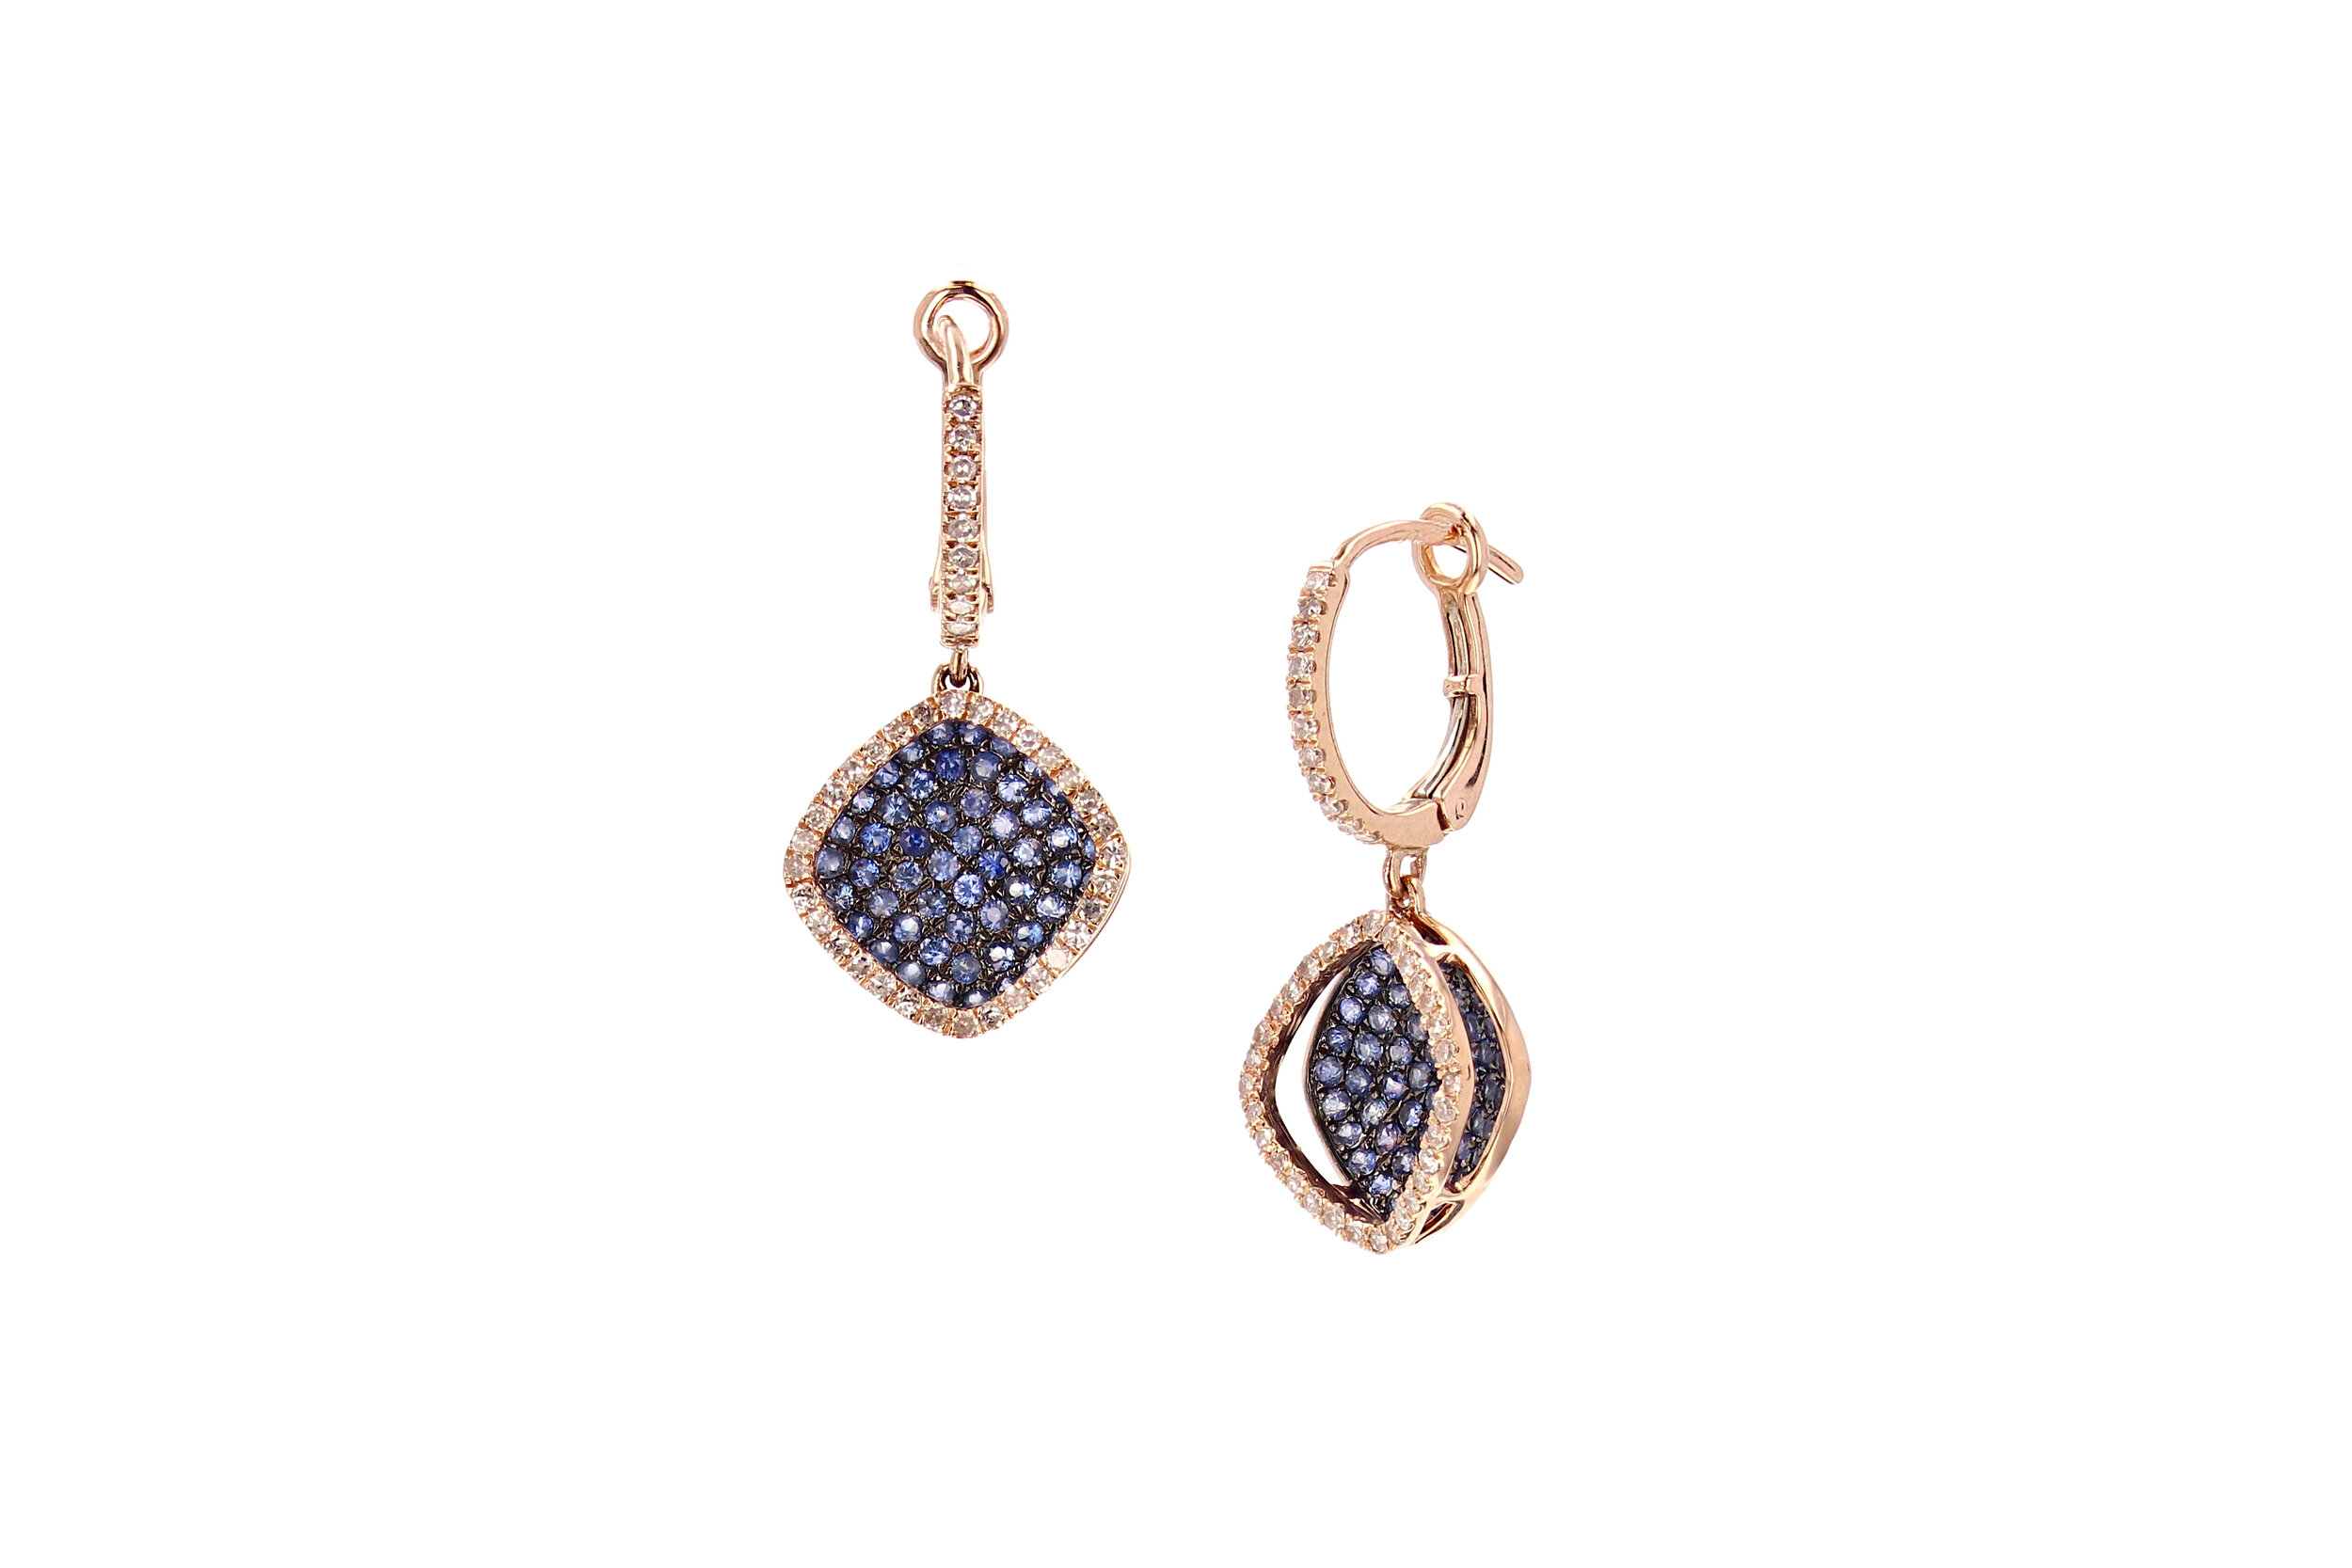 Stunning 14K Rose Gold deep blue Sapphire (1.55 ctw.) and Diamond (0.43 ctw.) drop earrings. $3250